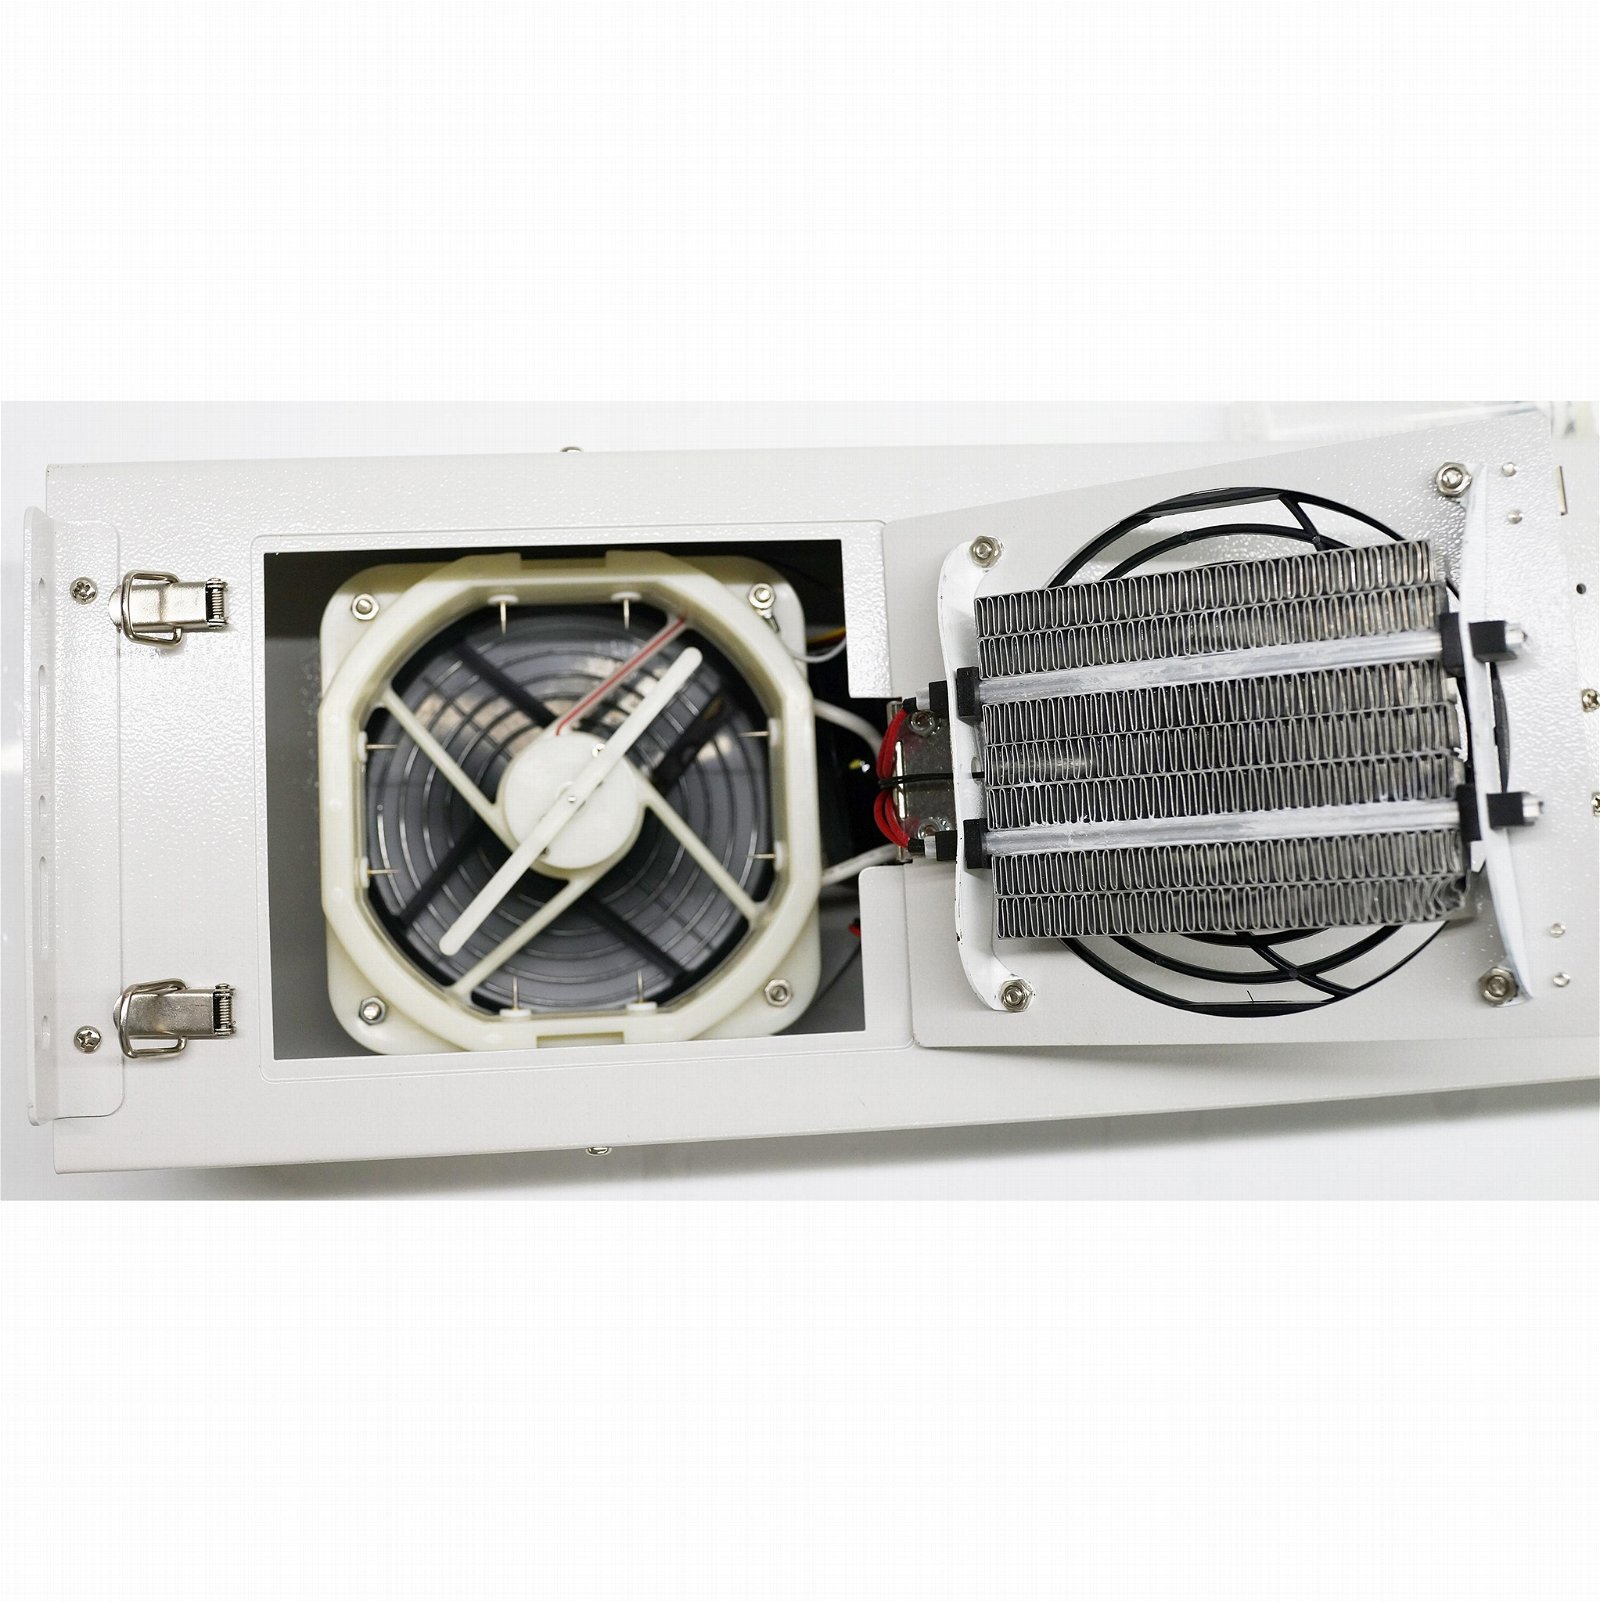 3 fans smart auto clean ion balance monitor ionizer blower 6